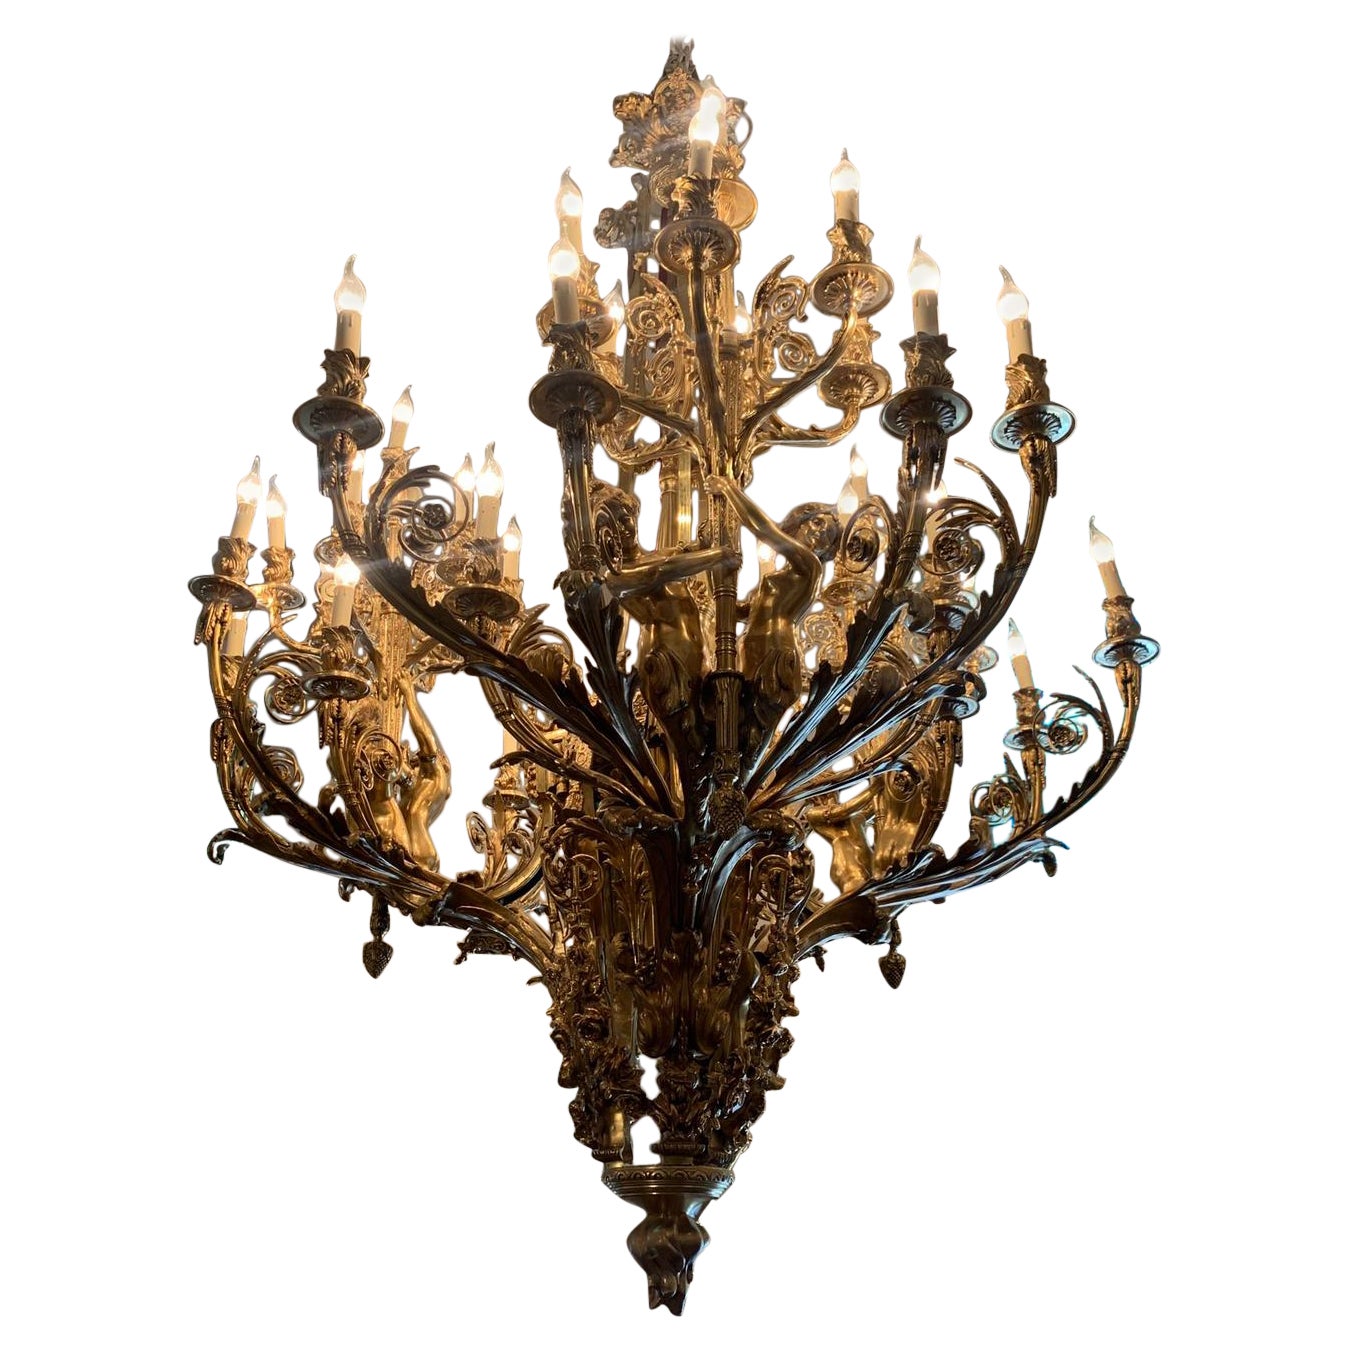 Superbe lustre baroque en bronze massif ancien de 7 pieds de haut.  en vente